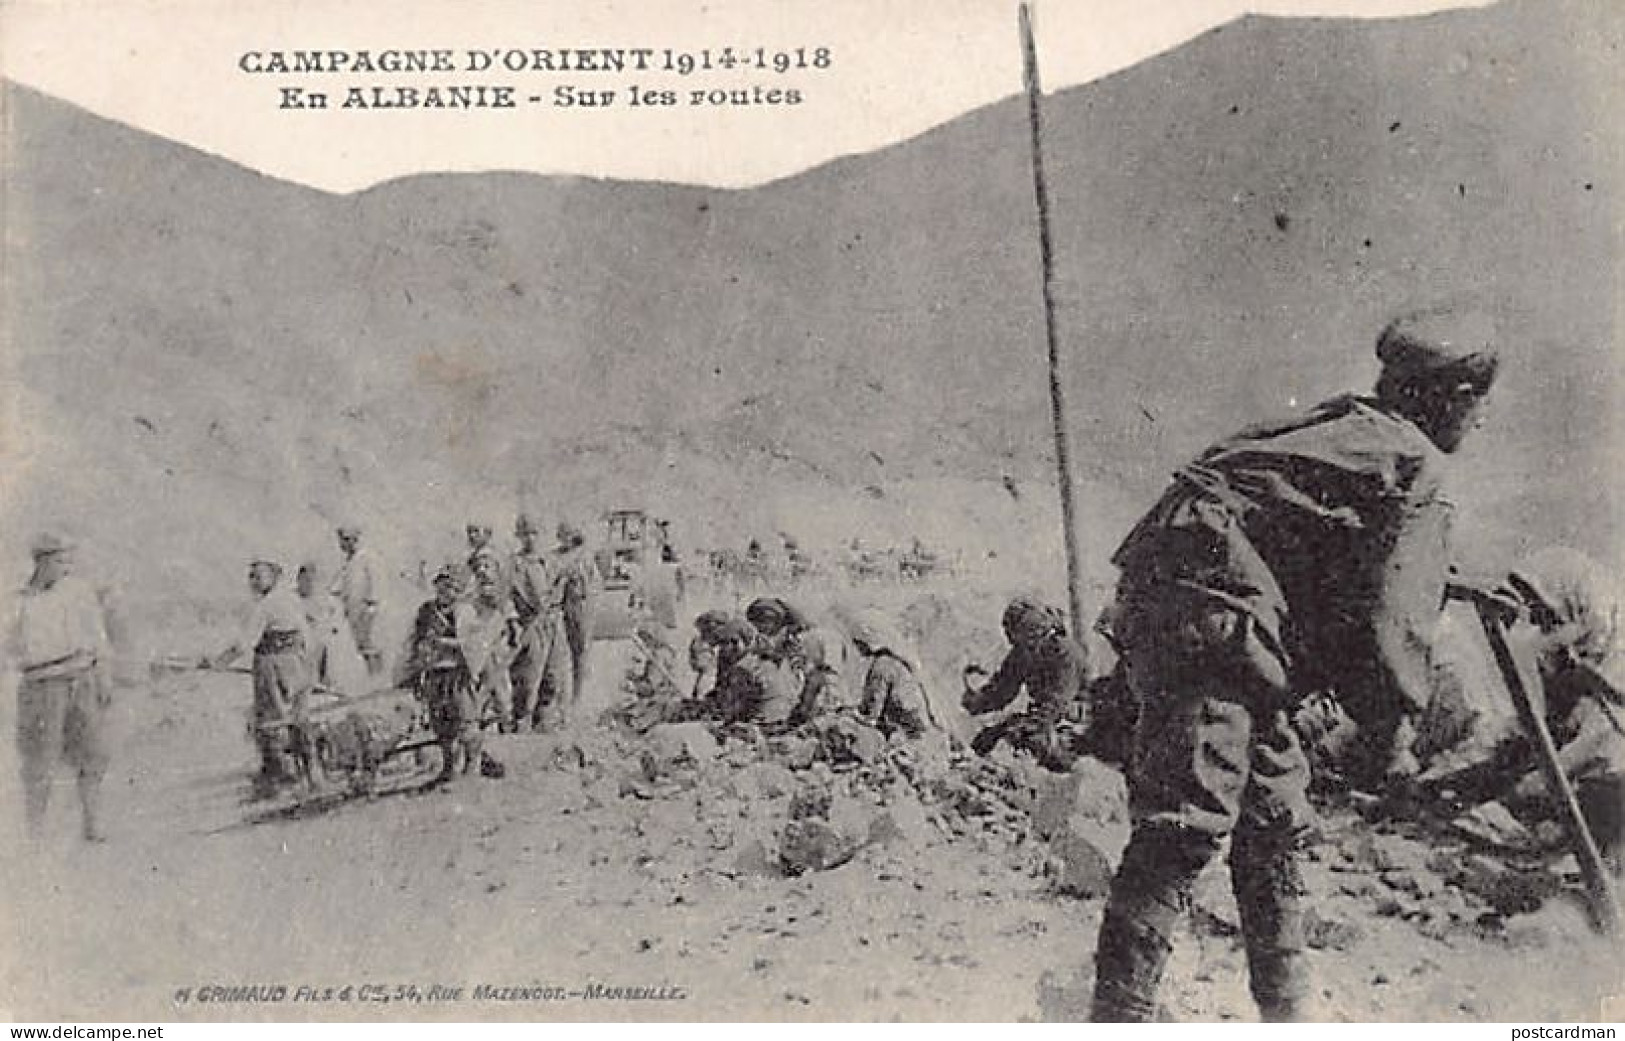 Albania - World War One - Albanian Peasants Repairing A Road - Publ. H. Grimaud  - Albanie